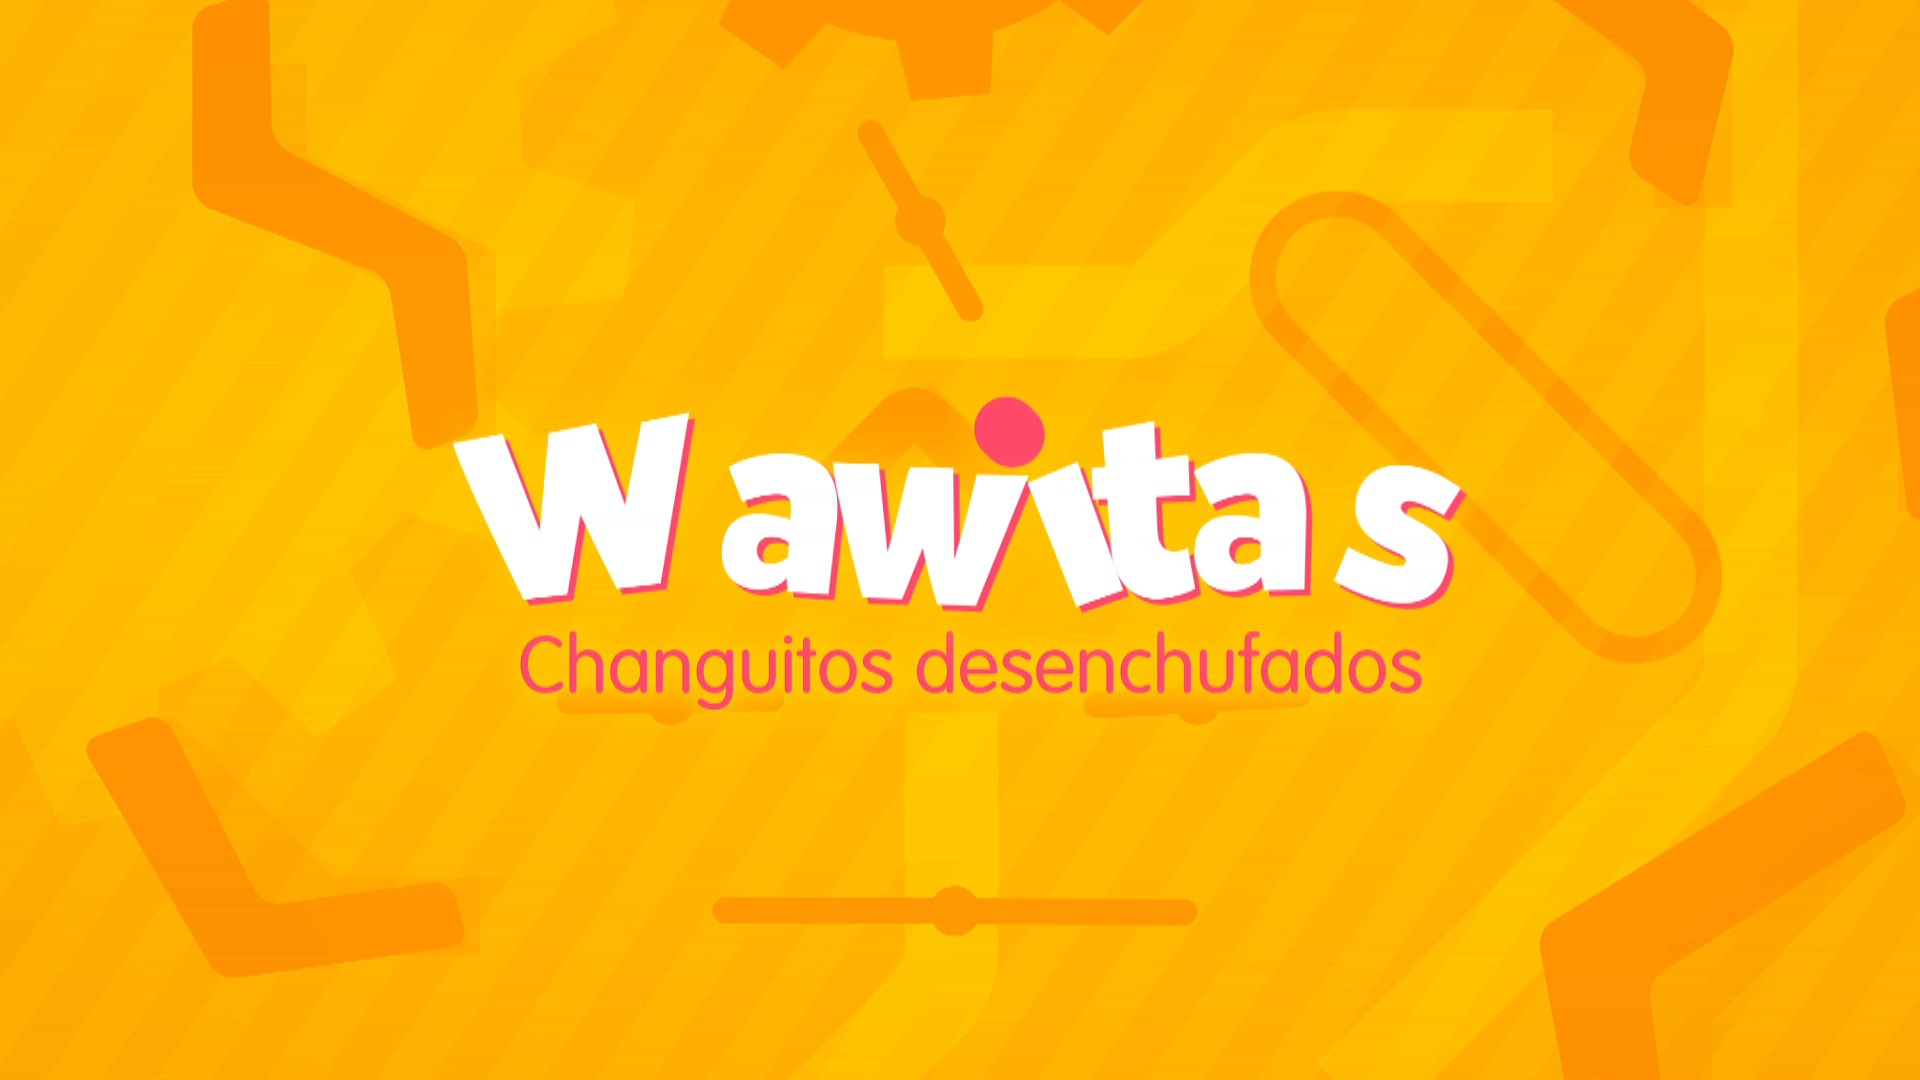 Wawitas, Changuitos Desenchufados